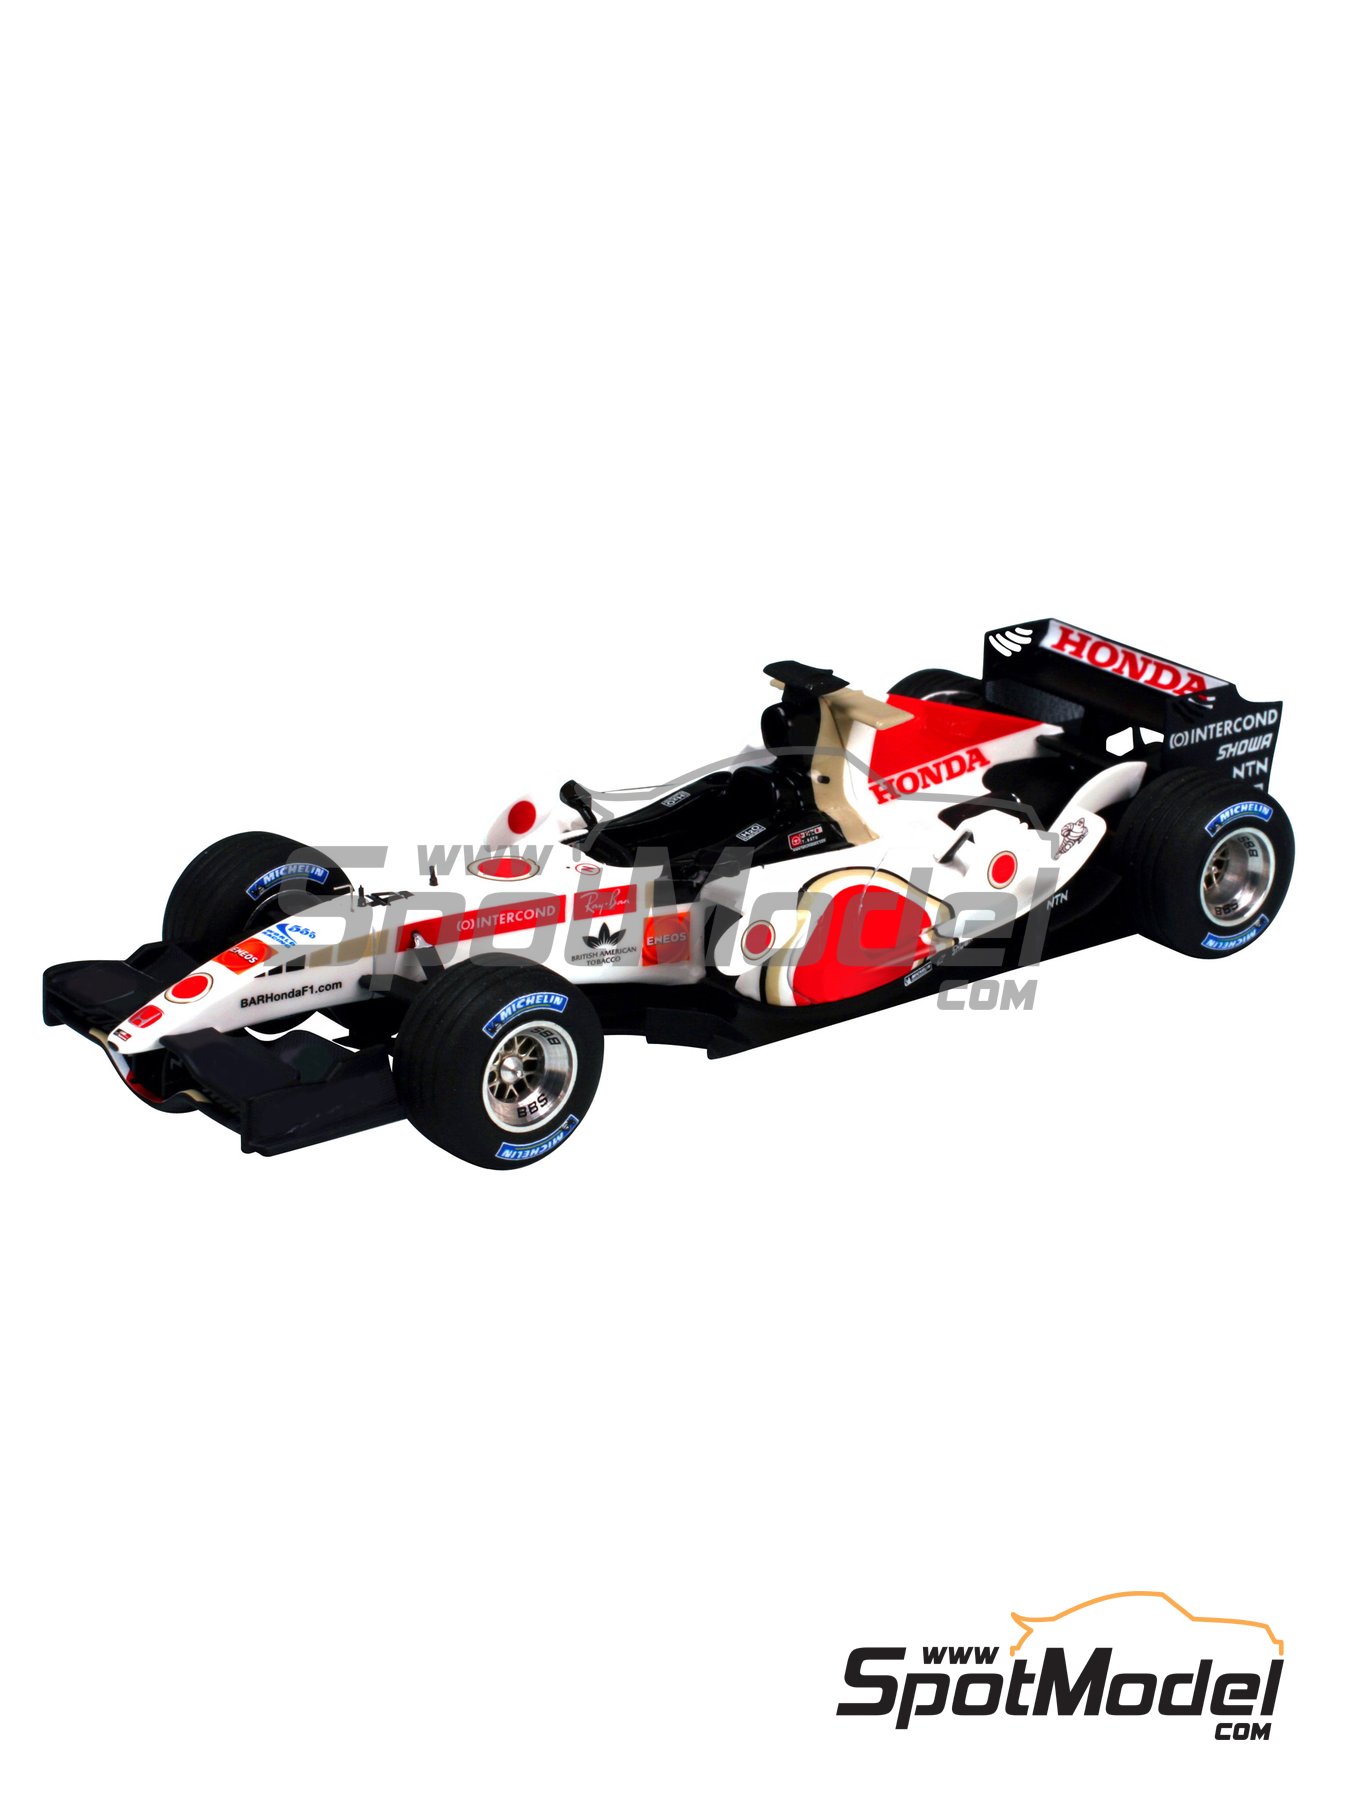 BAR Honda 007 British American Racing Team sponsored by Lucky Strike -  Japanese Formula 1 Grand Prix 2005. Car scale model kit in 1/43 scale  manufactu